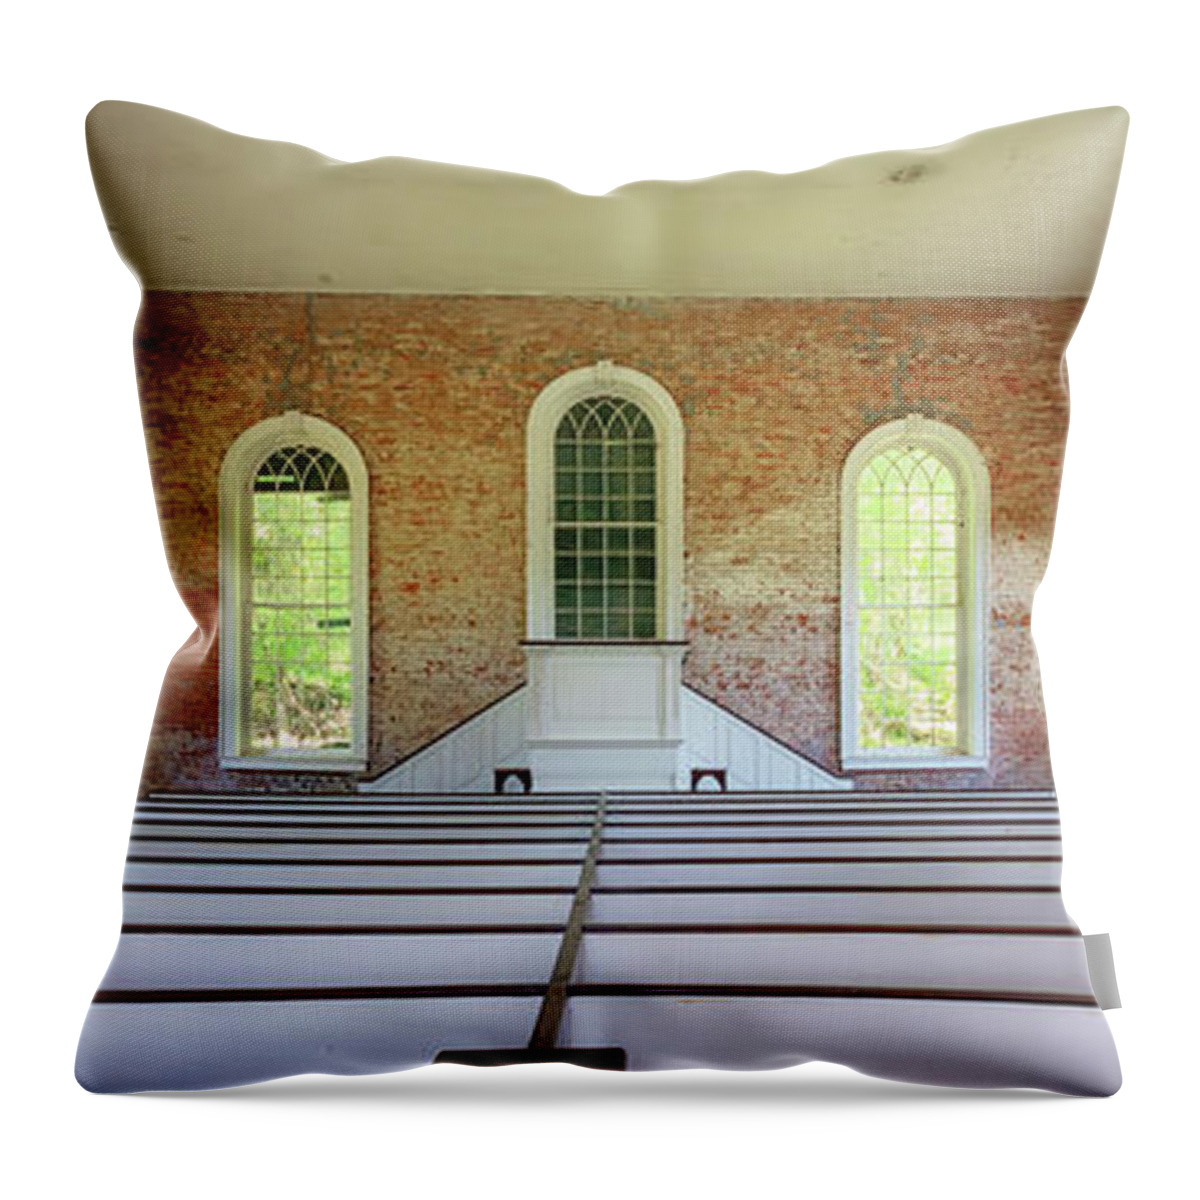 Rodney Presbyterian Church Throw Pillow featuring the photograph Rodney Presbyterian Church Interior by Susan Rissi Tregoning